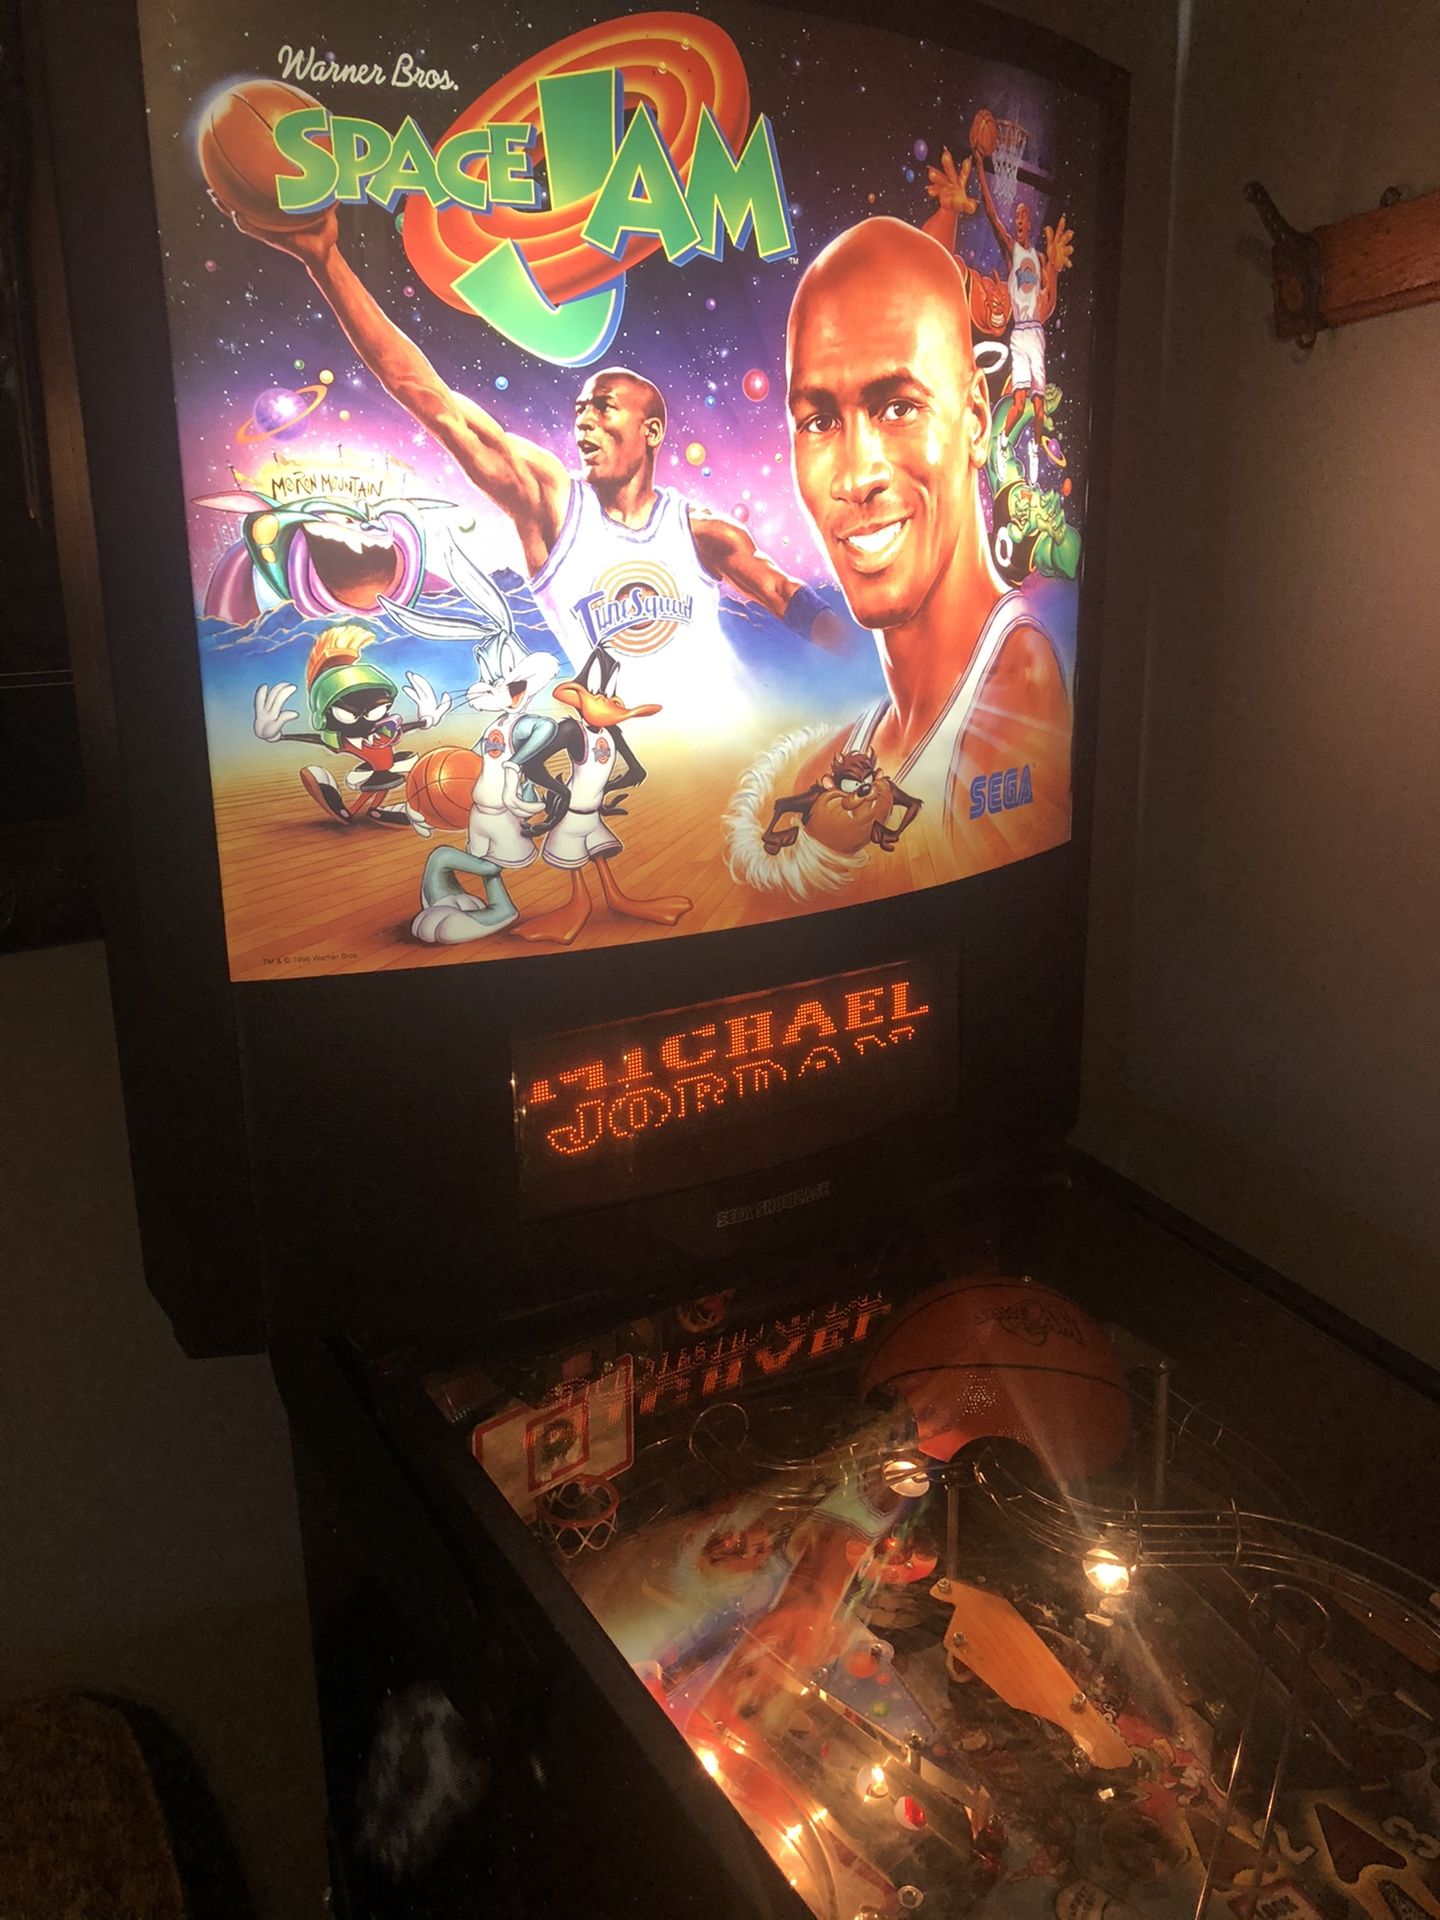 1996 Sega Space Jam Pinball Machine - serviced and works!